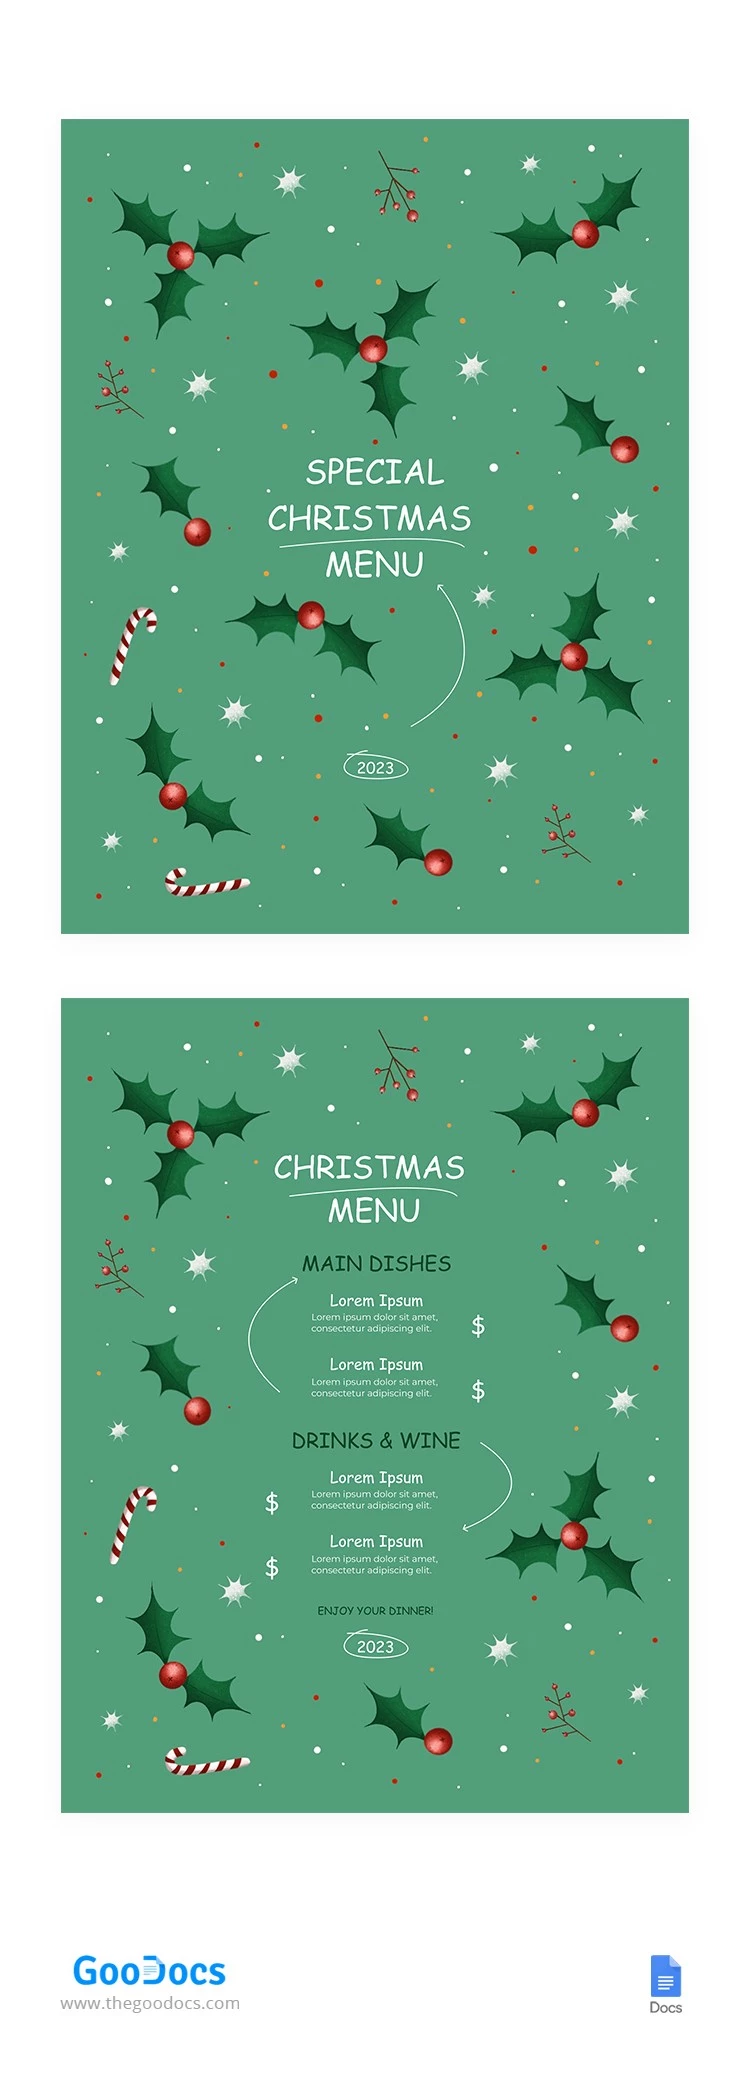 Menu de Natal ilustrado - free Google Docs Template - 10065002